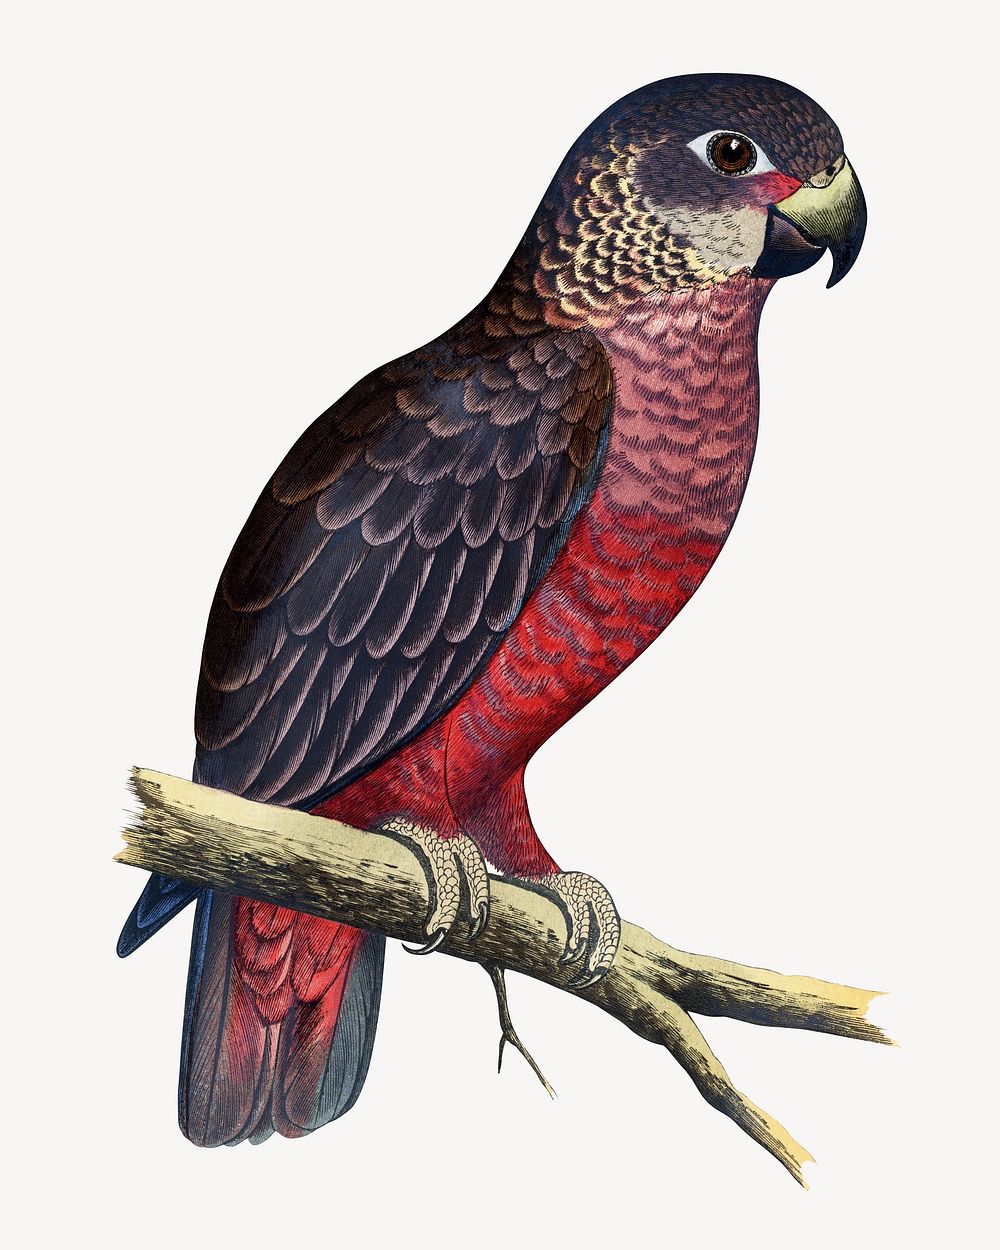 Violet parrot vintage bird illustration. Remixed by rawpixel.